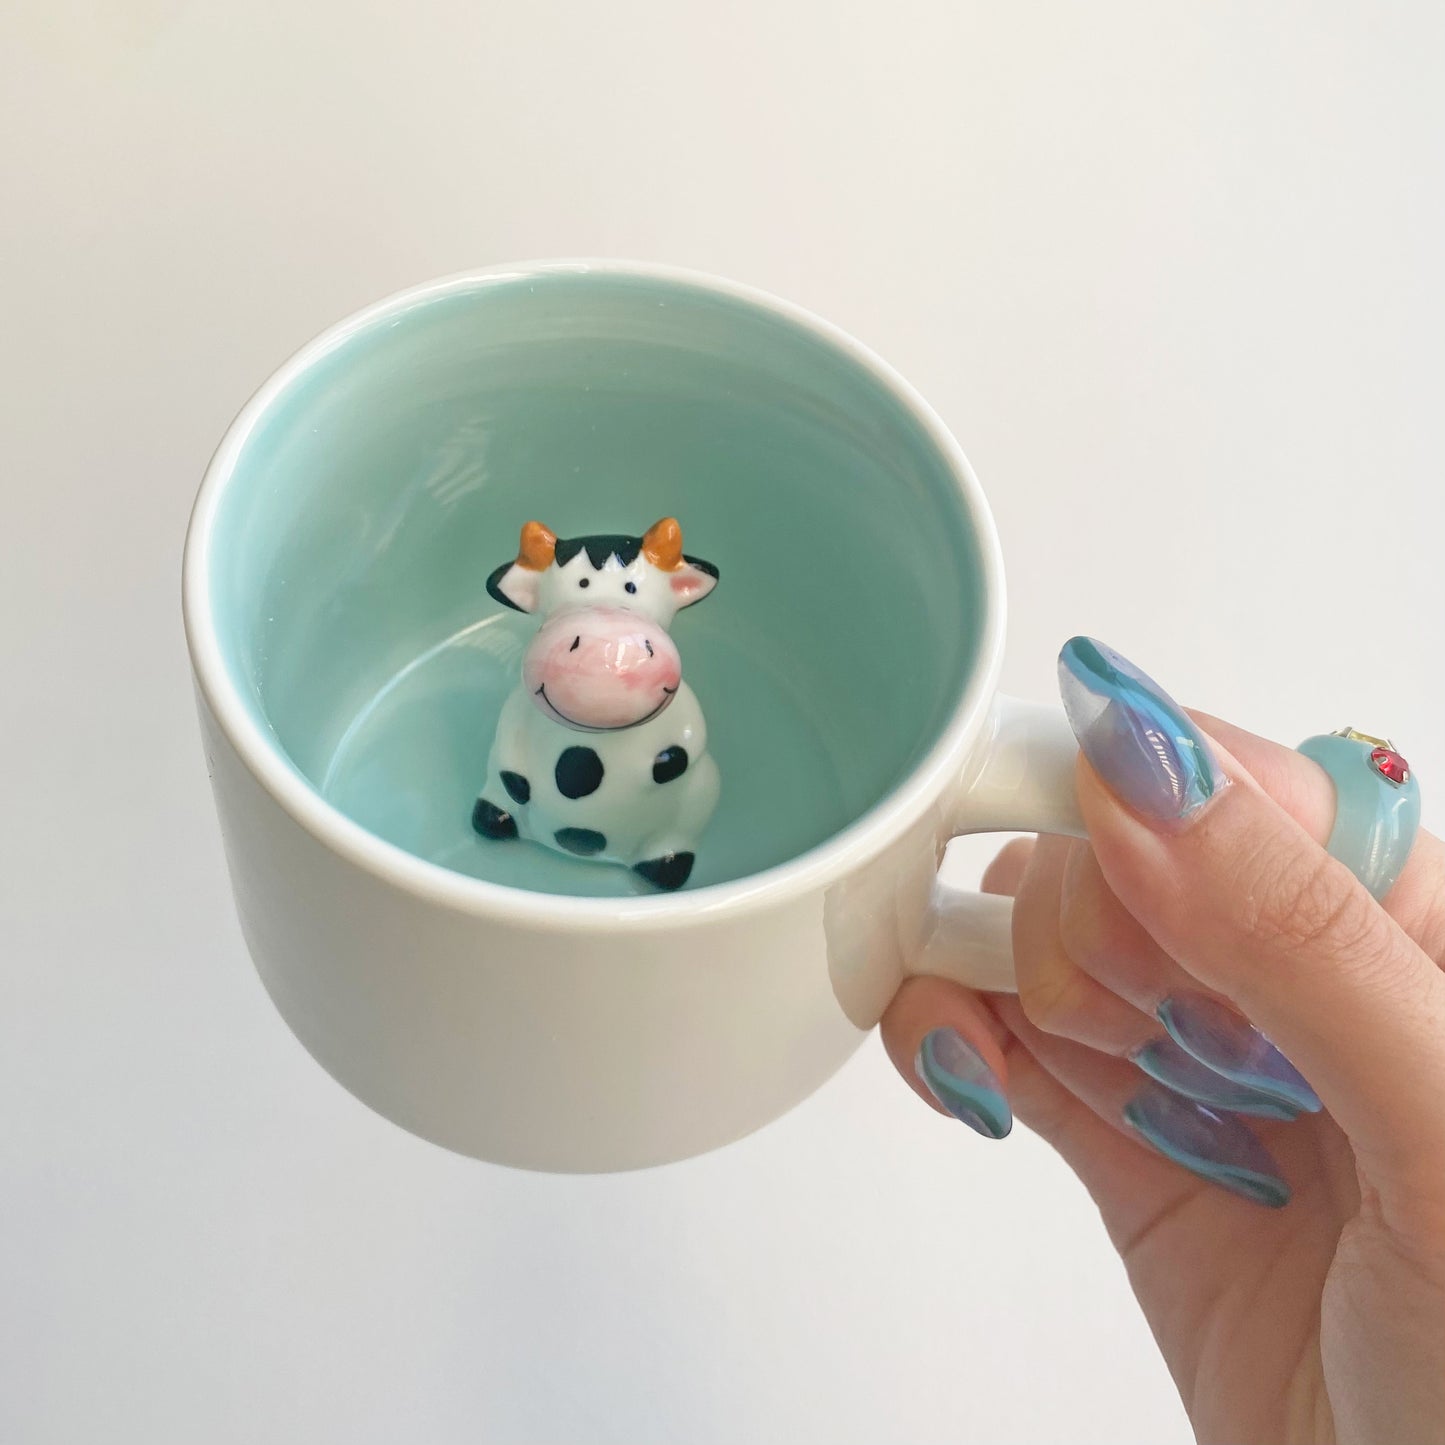 ceramic mug with cow figurine